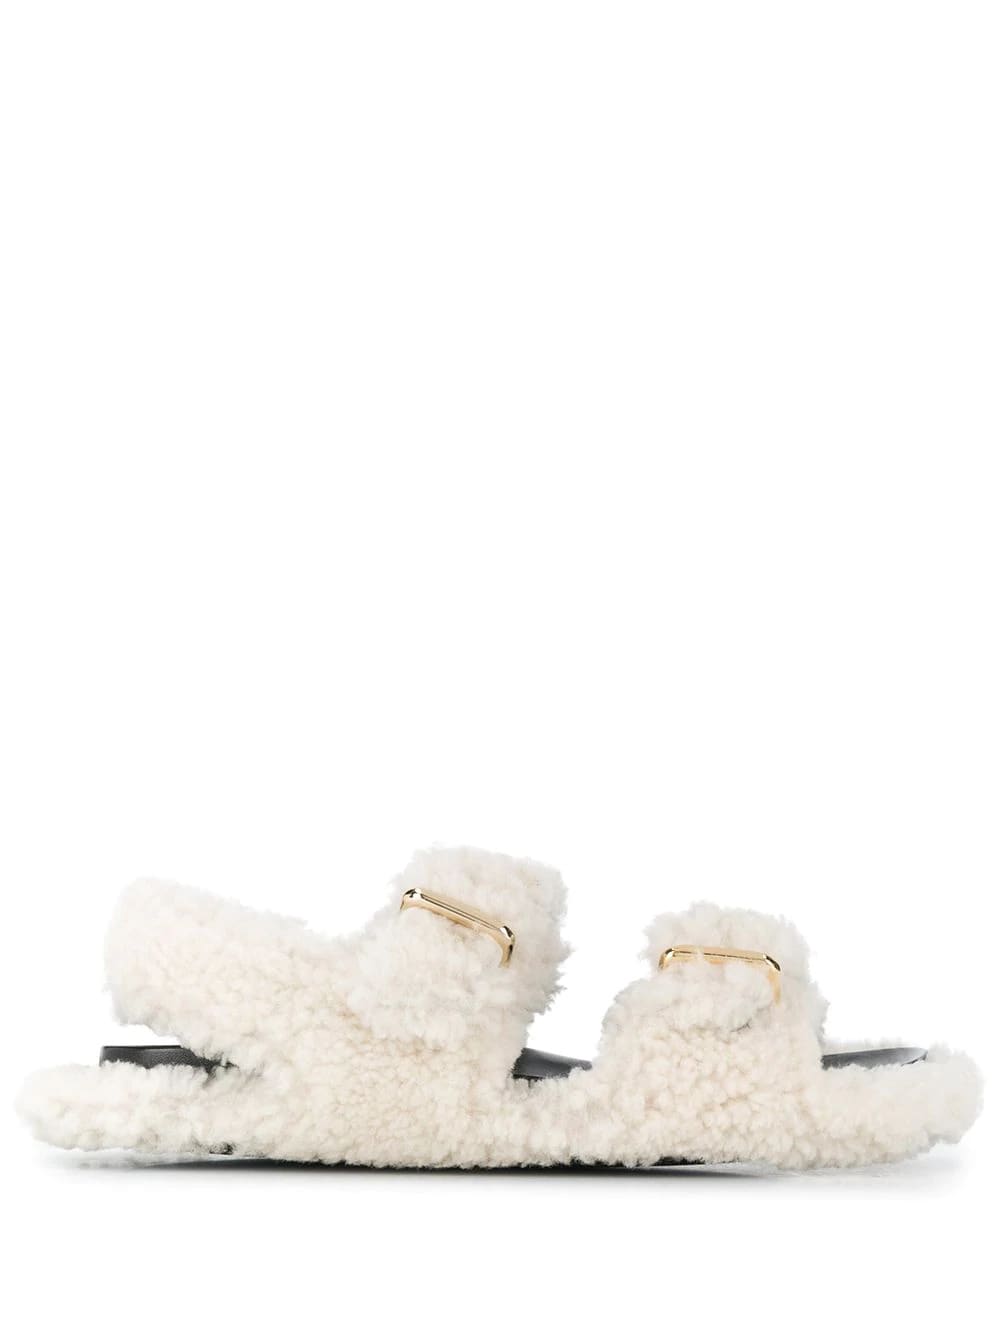 Buy Marni Woman White Shearling Flat Sandal online, shop Marni shoes with free shipping